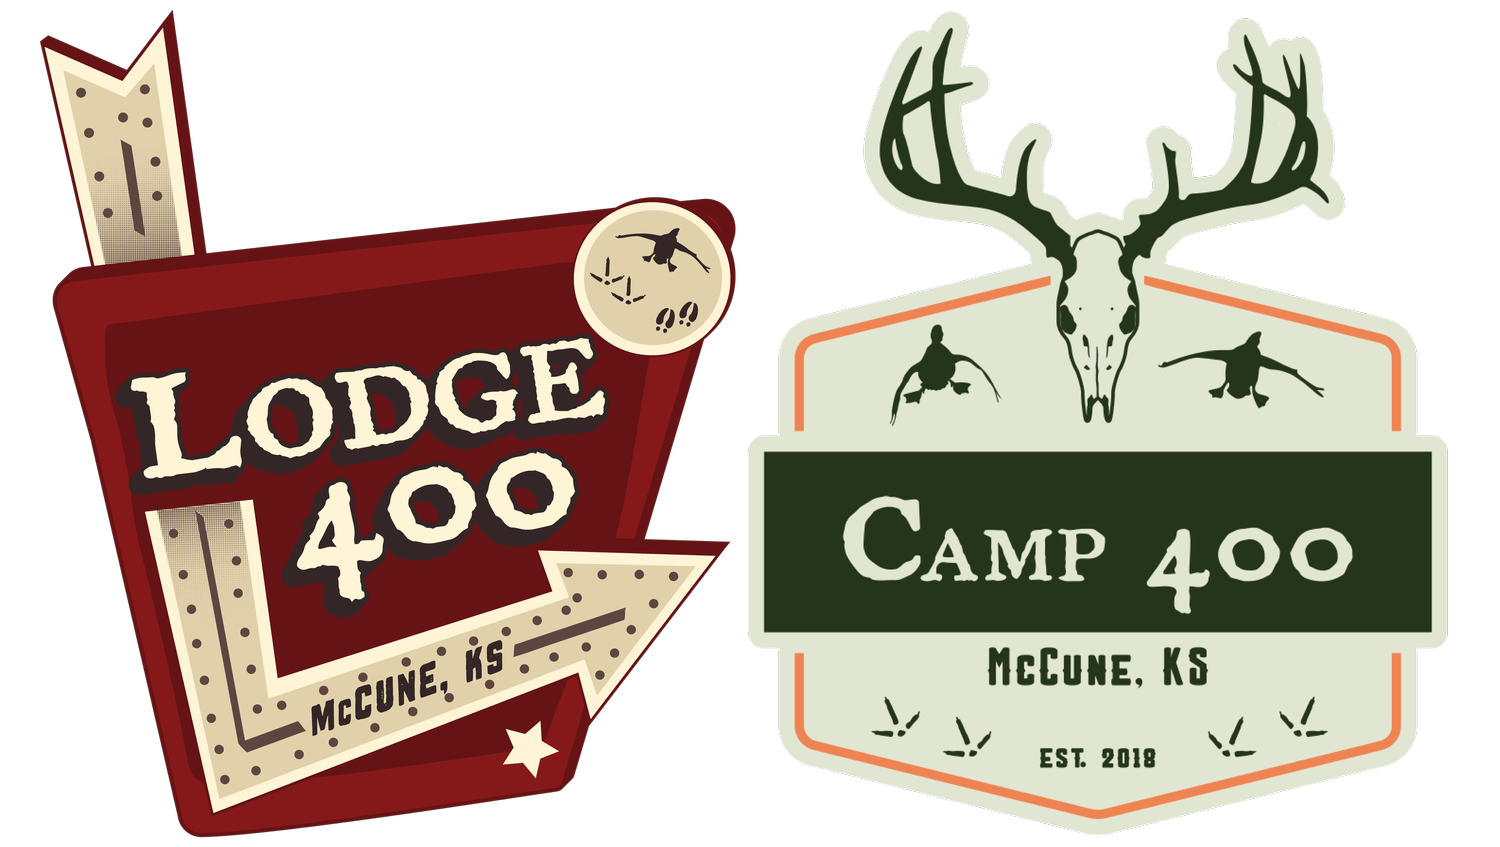 Camp 400